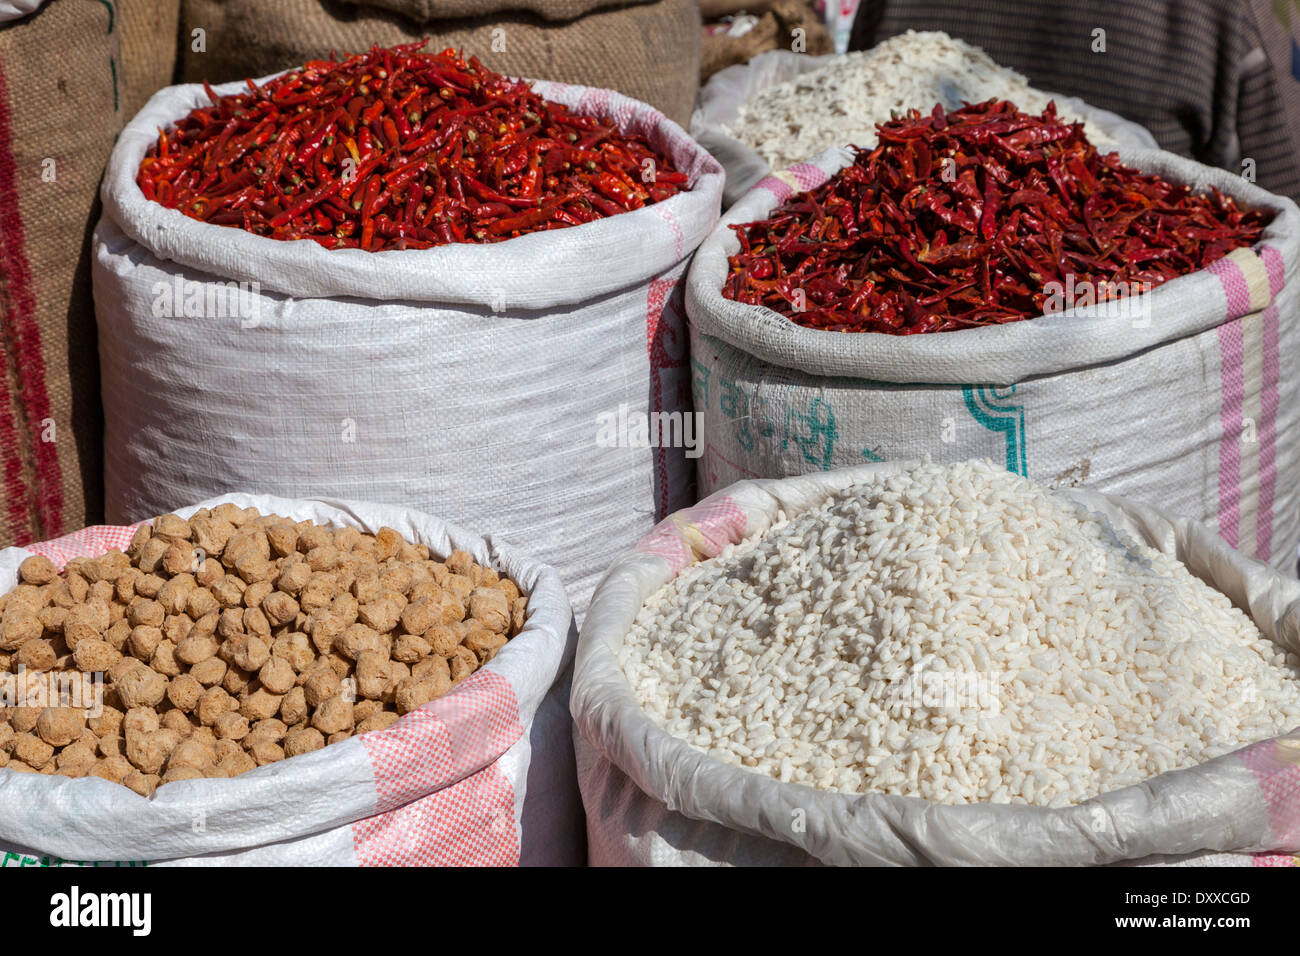 India, Dehradun. Chilies, Puffed Rice, Balls of Soybean Powder. Stock Photo